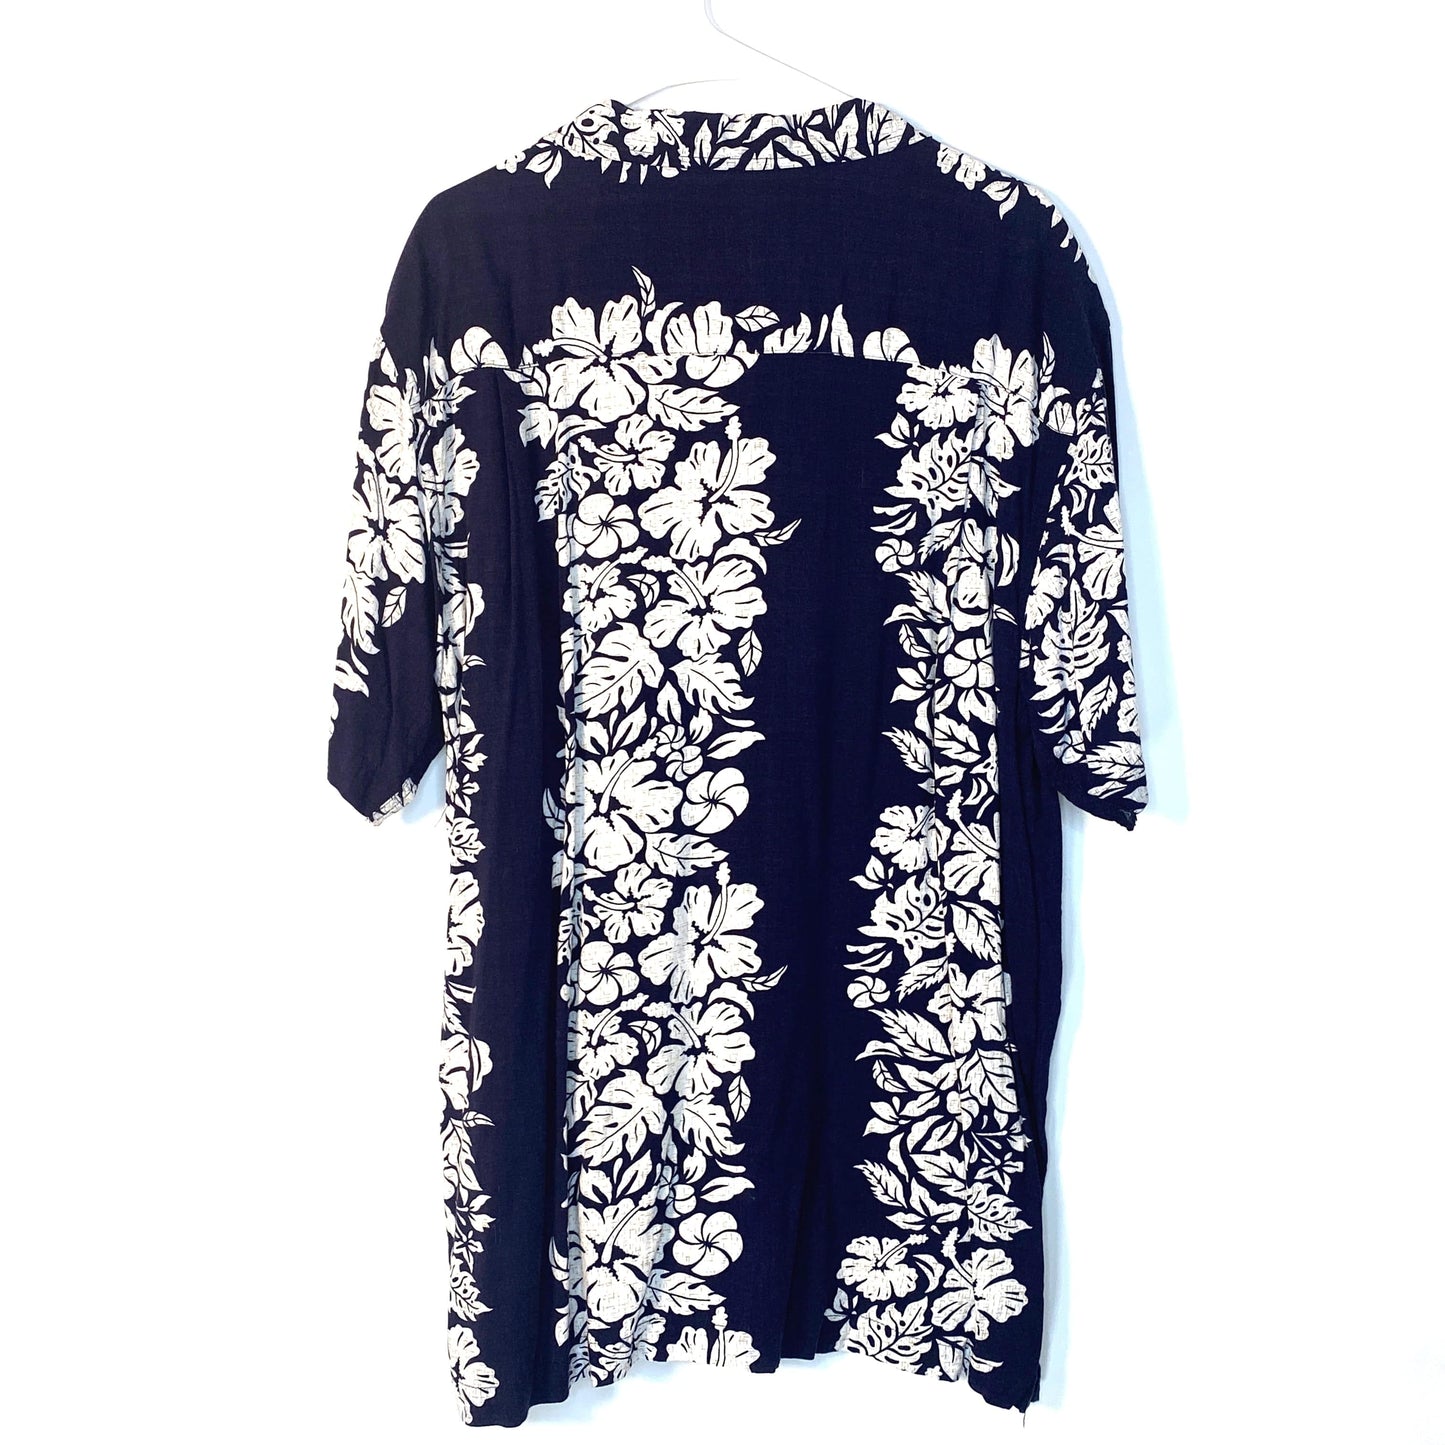 Steve & Barry’s Mens XL Blue White Floral Hawaiian Shirt S/s